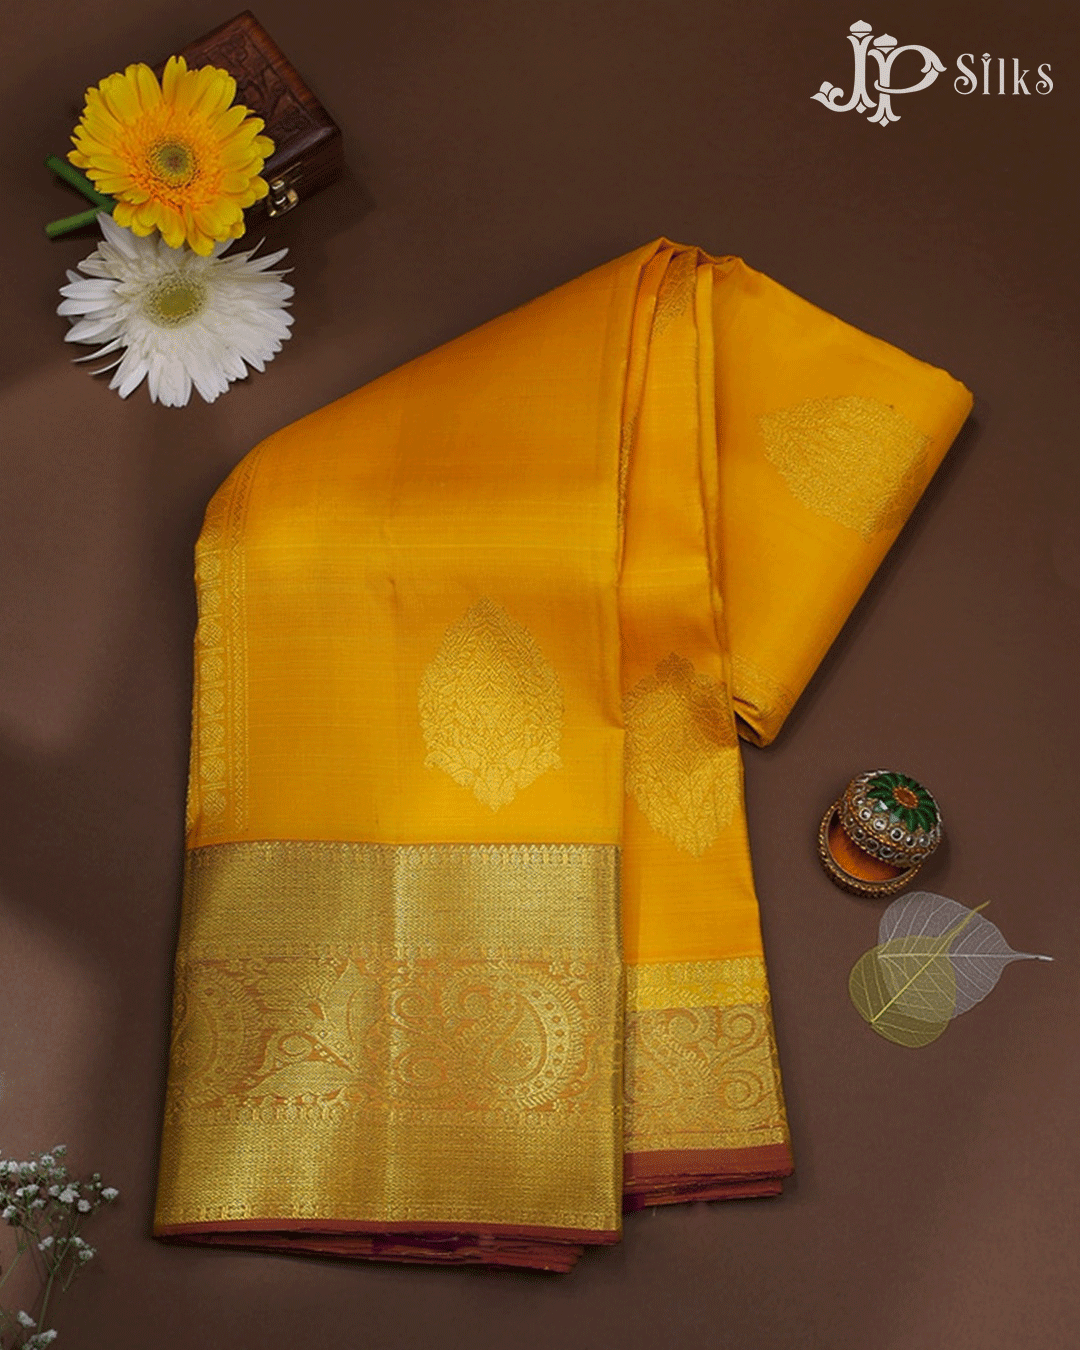 Lemon Yellow and Brown Vertical Lines Kanchipuram Silk Saree - E4712